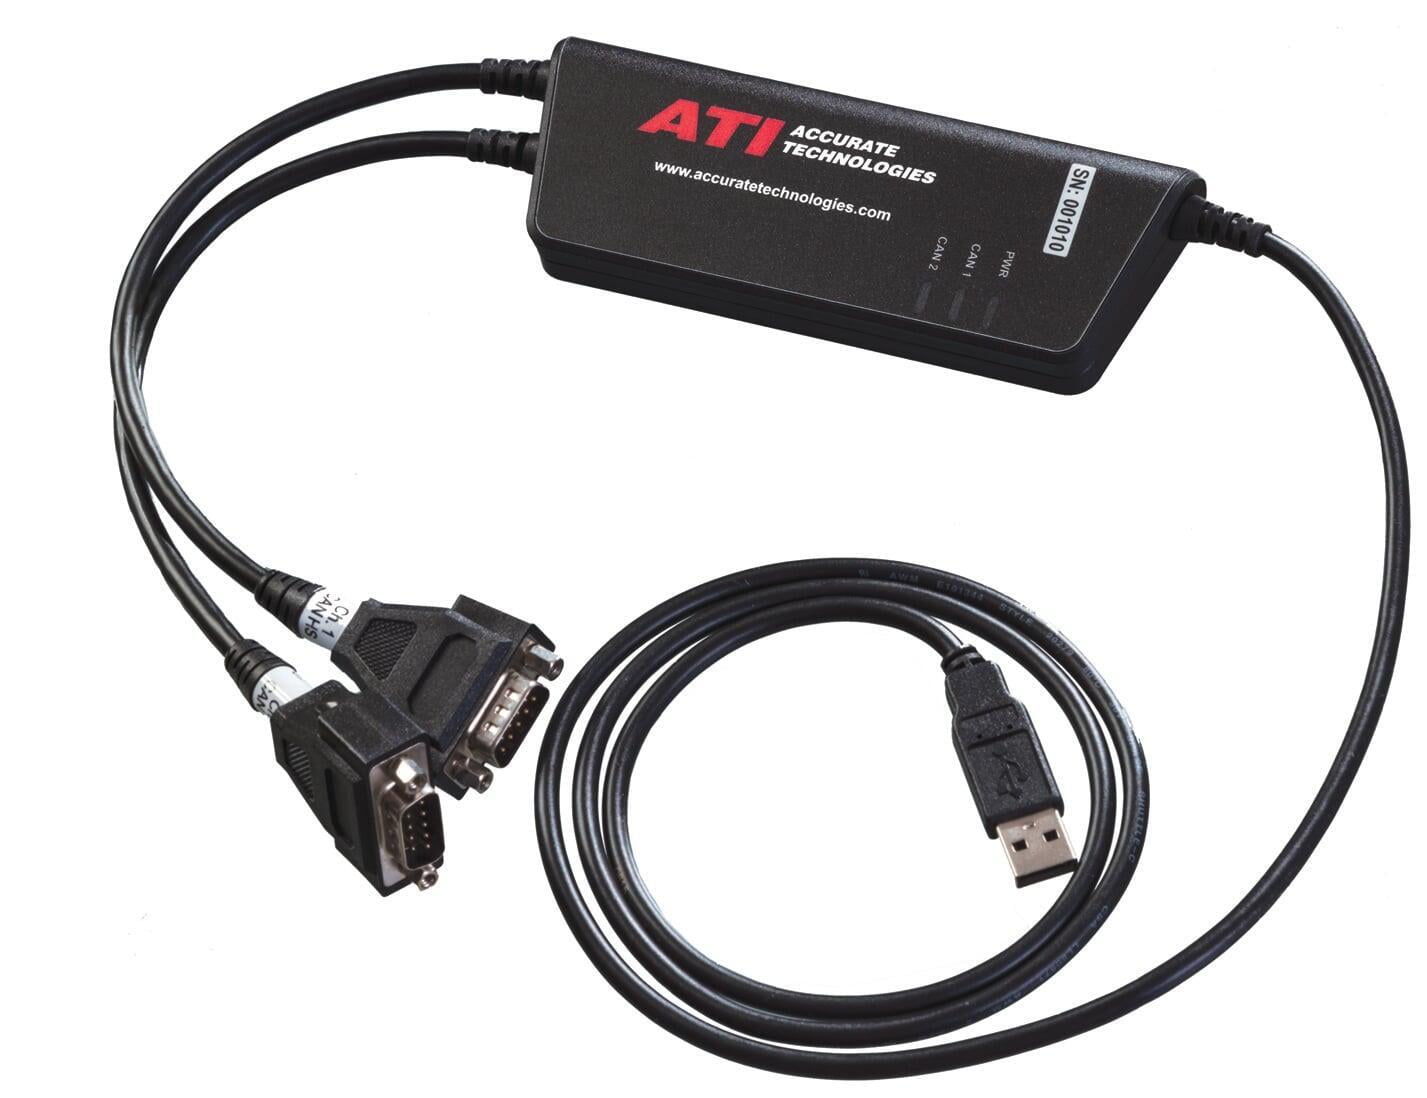 ATI USBcan Pro 2xHS V2